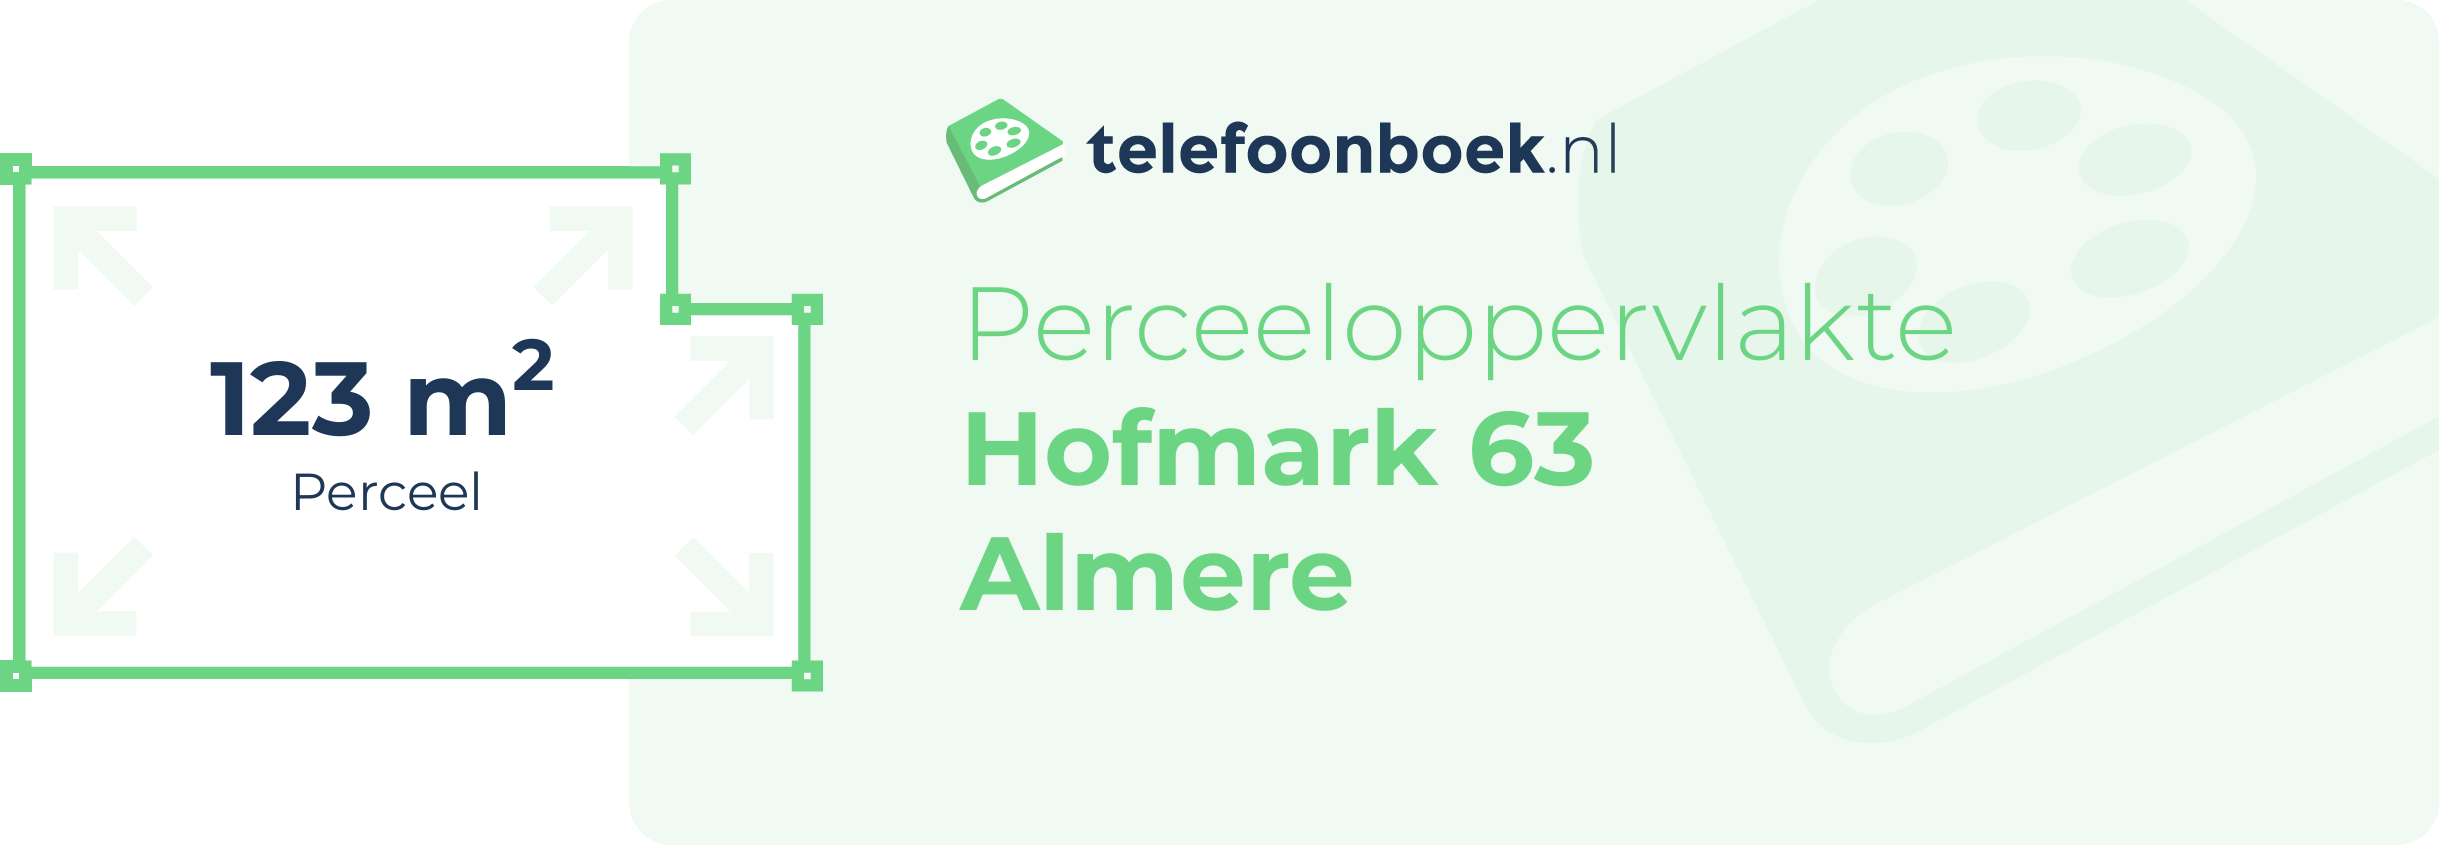 Perceeloppervlakte Hofmark 63 Almere